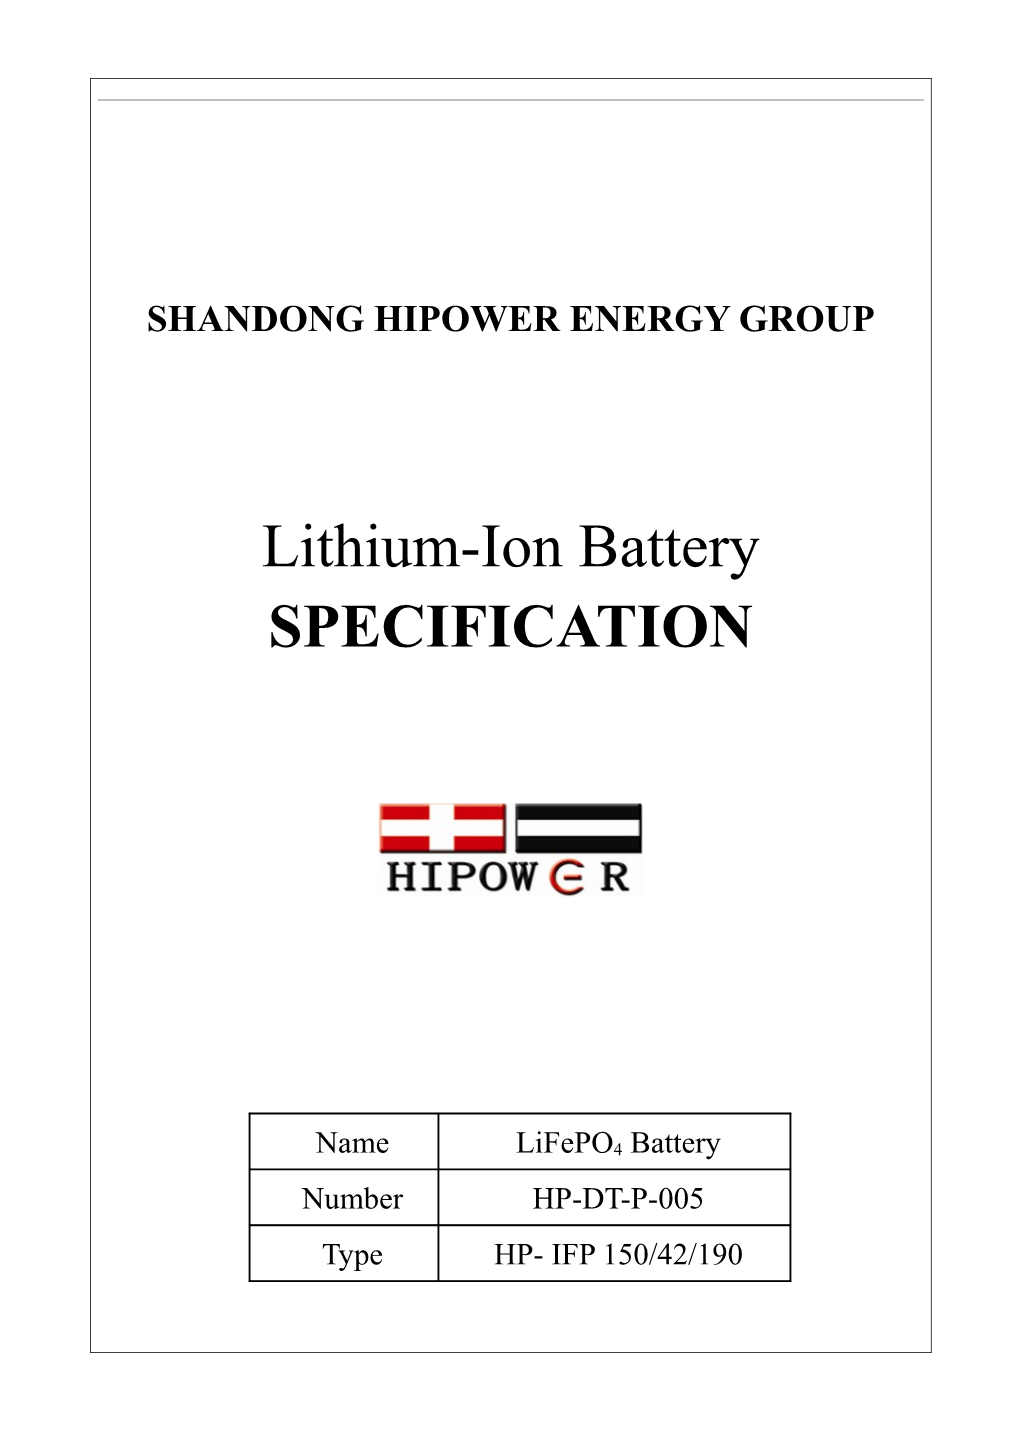 Shandong Hipower Energy Group